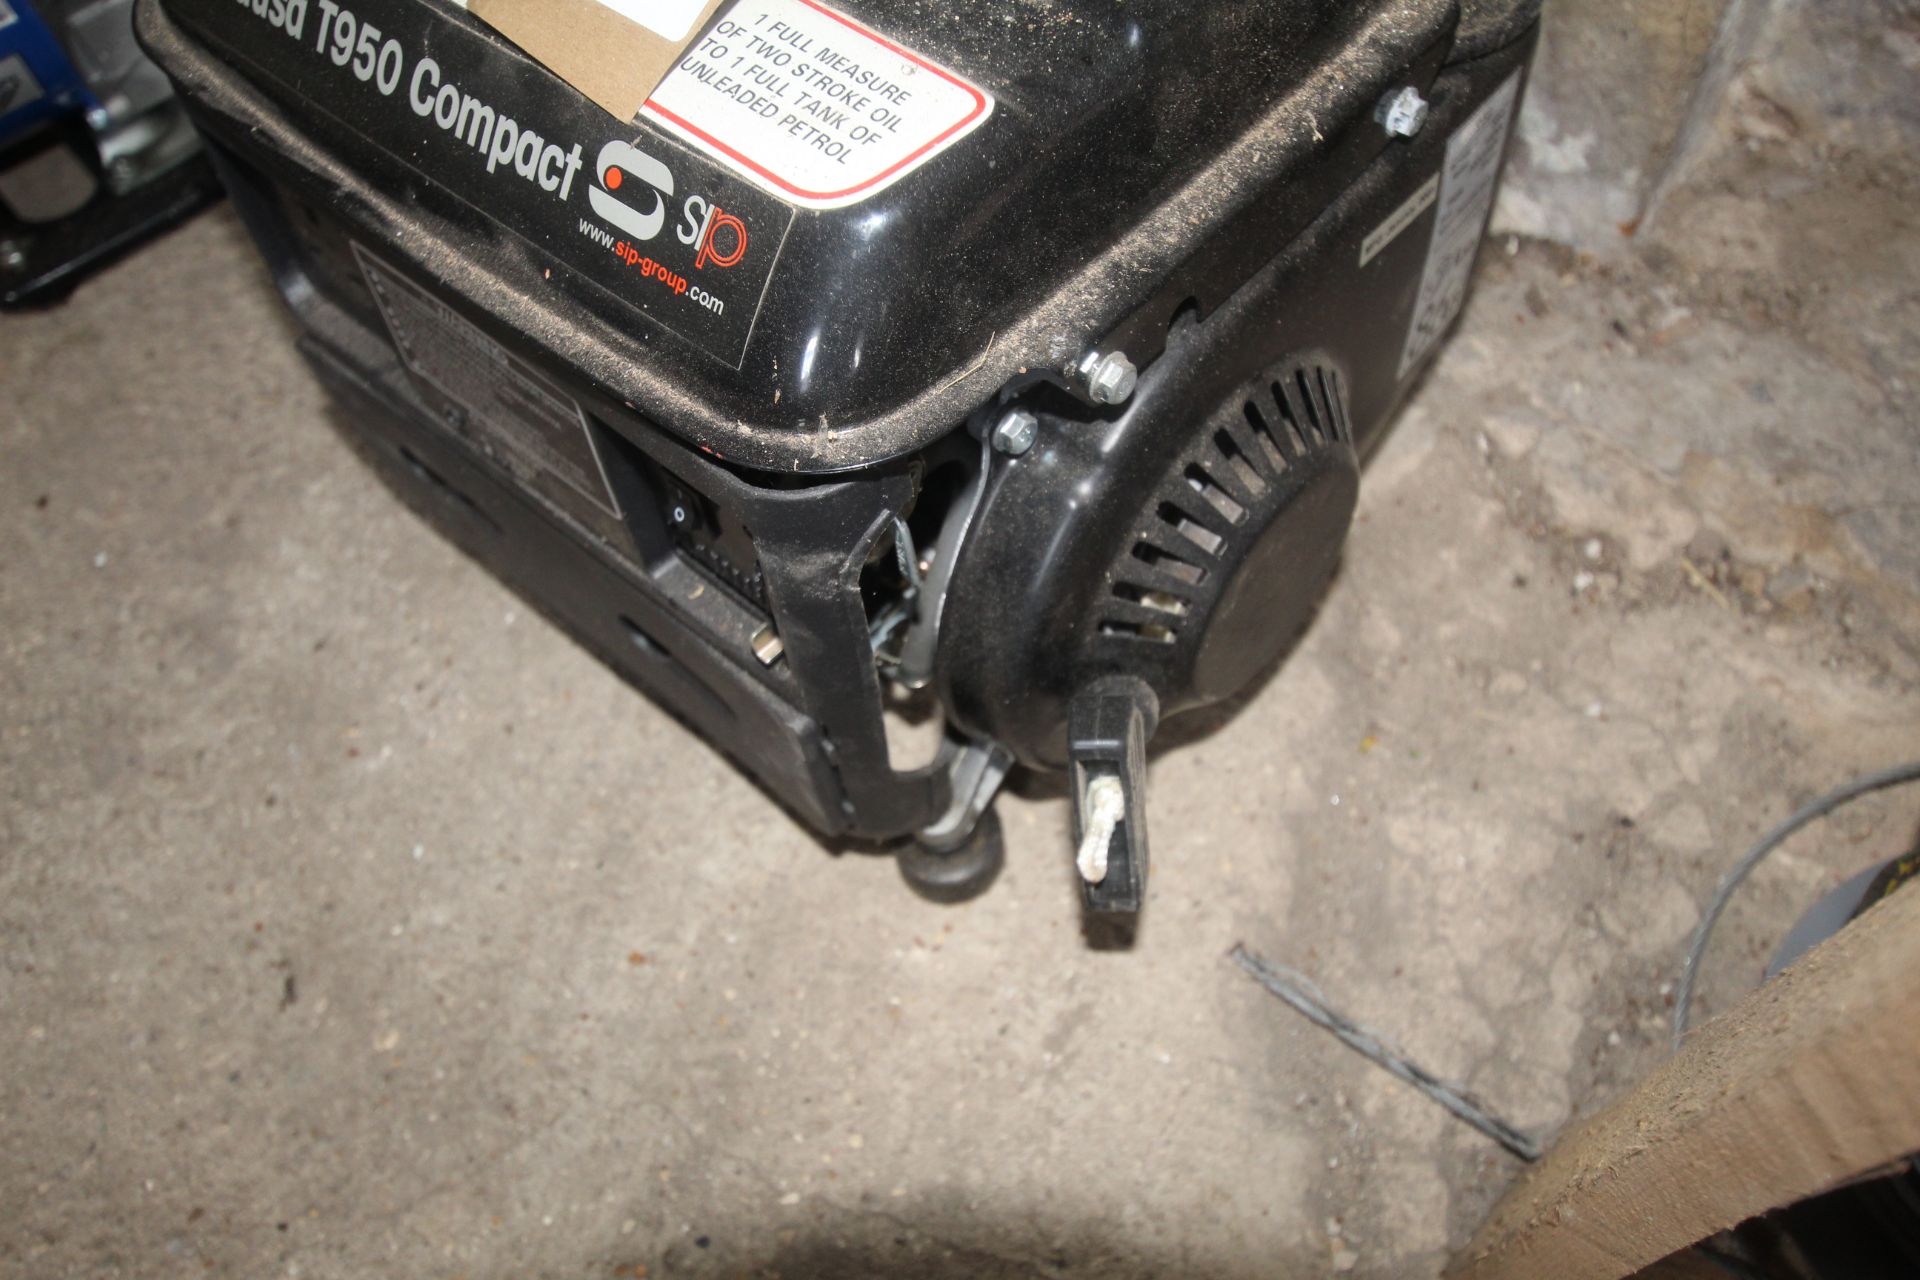 SIP Medusa 950 compact generator. - Image 3 of 3